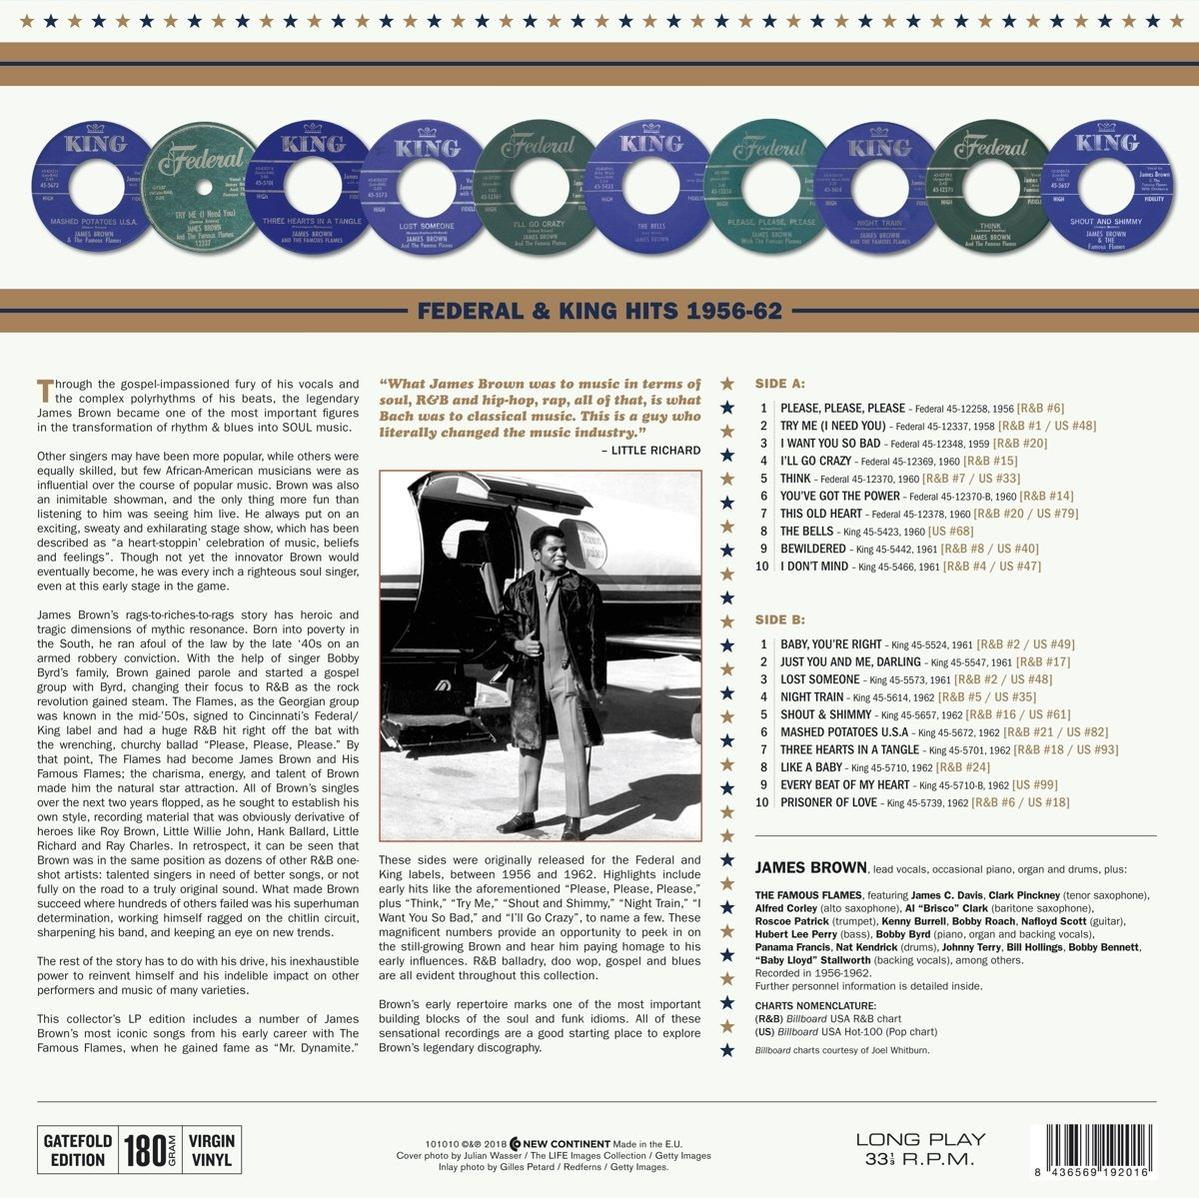 James Brown - You\'ve LP) Got Vinyl - (Gatefold (Vinyl) The Power Cover